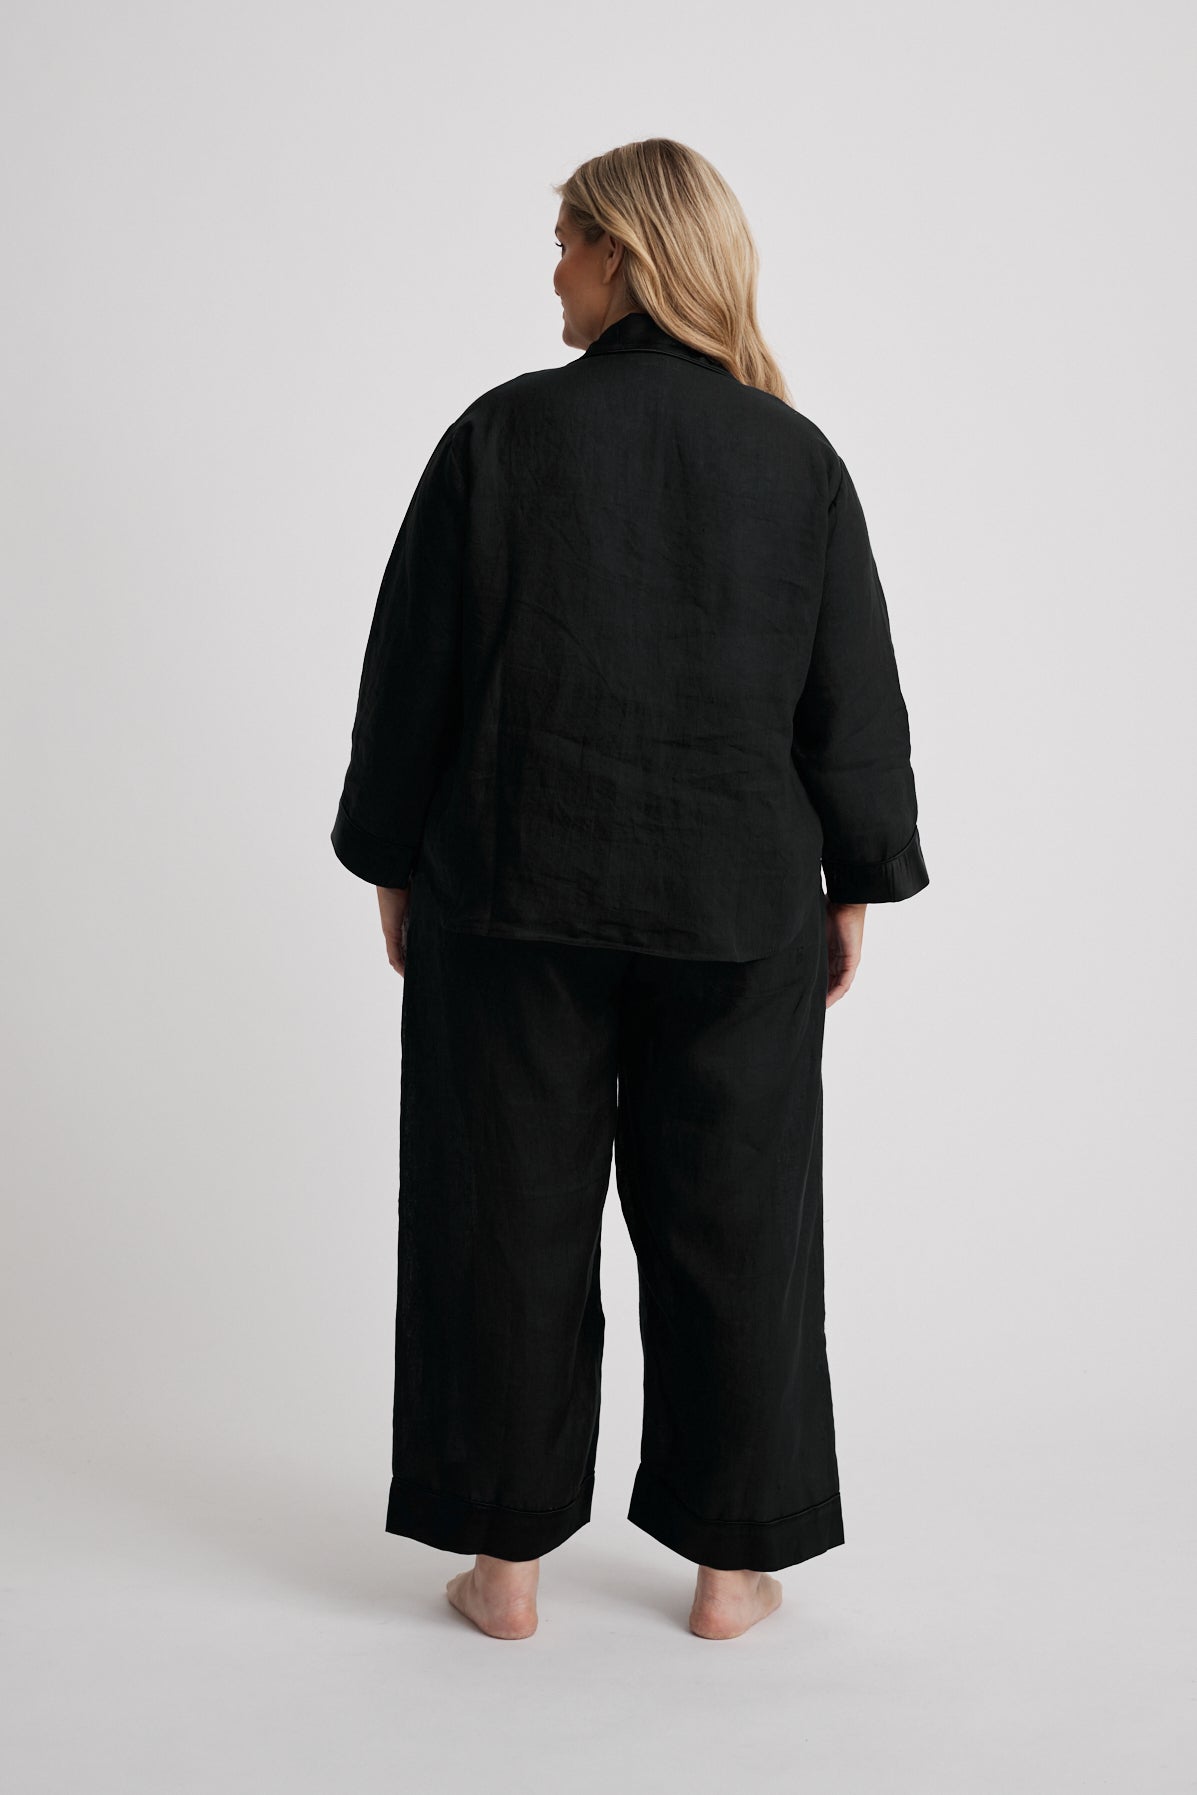 Hera - Pajama Set - Long - Black